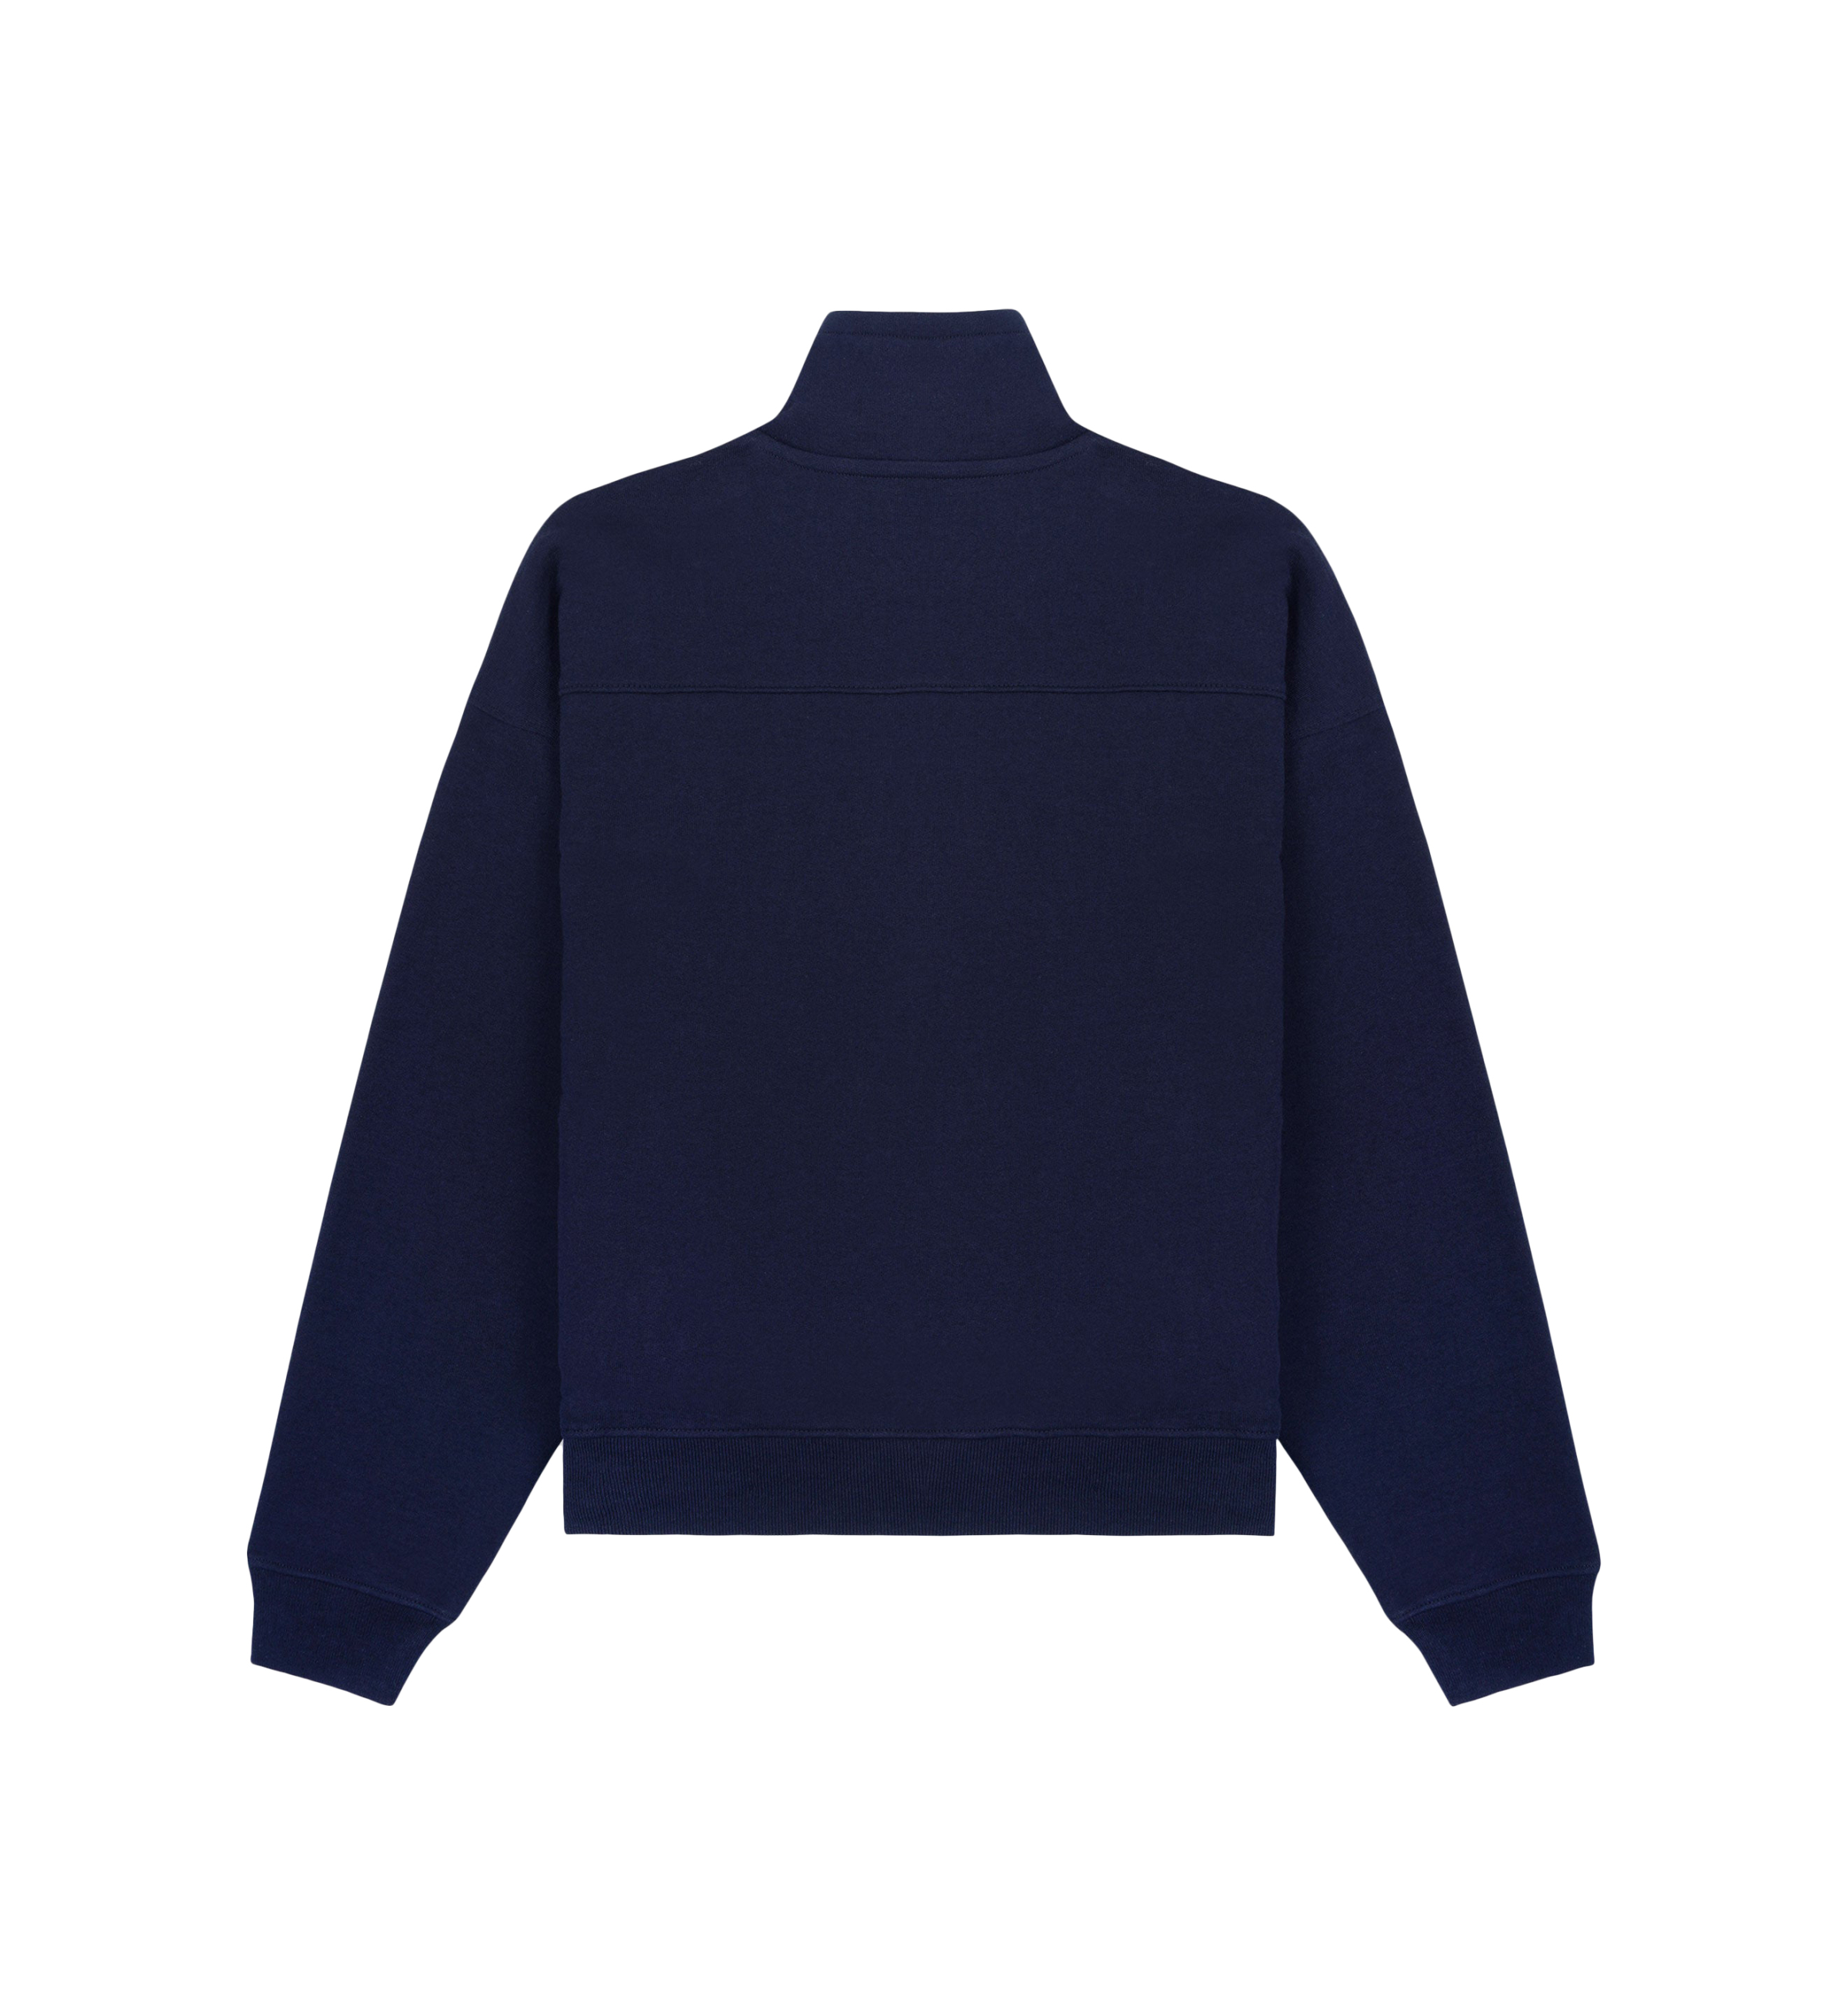 Shop Sporty And Rich Sr Sports Zip Up Sweatshirt In Navy Blue